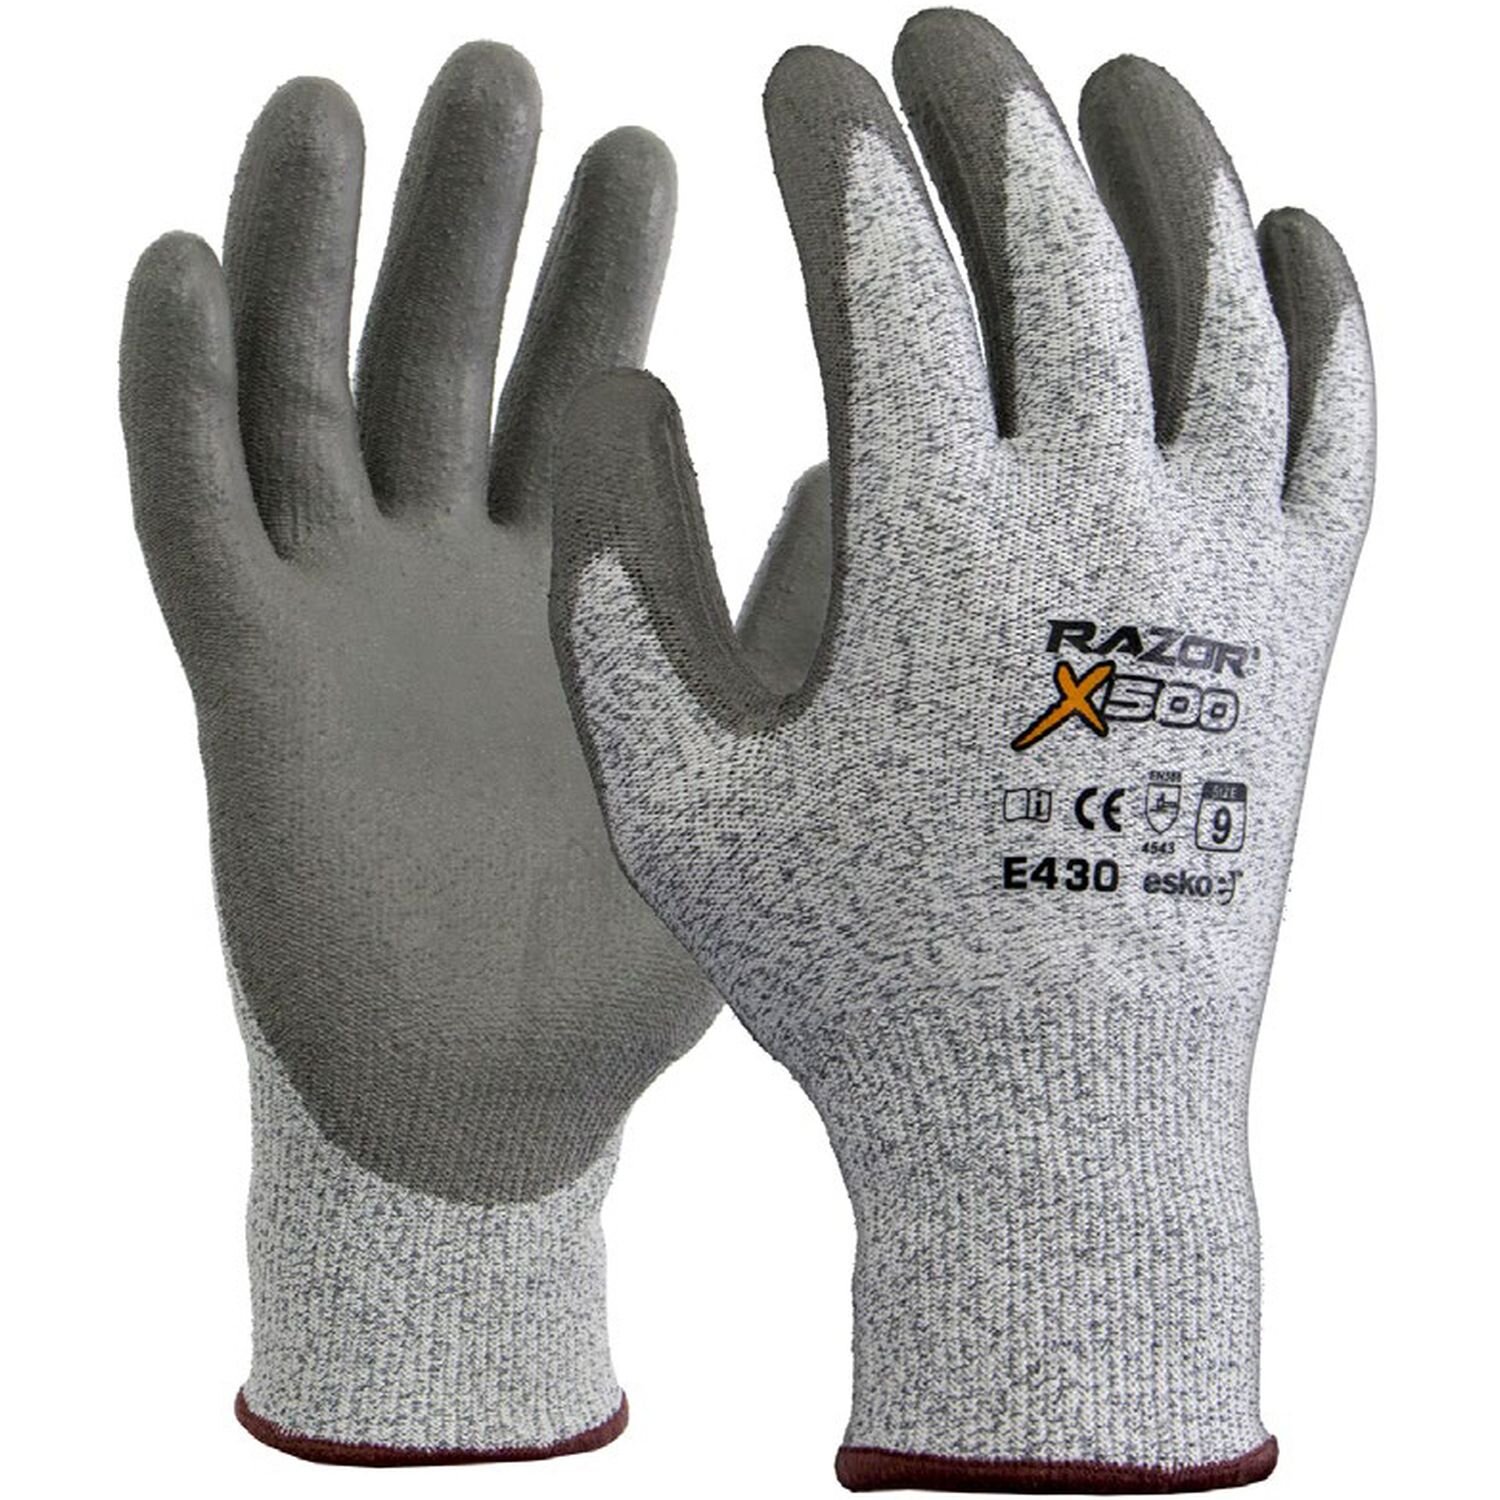 Razor X500 Cut 5 Resistant Level D Glove